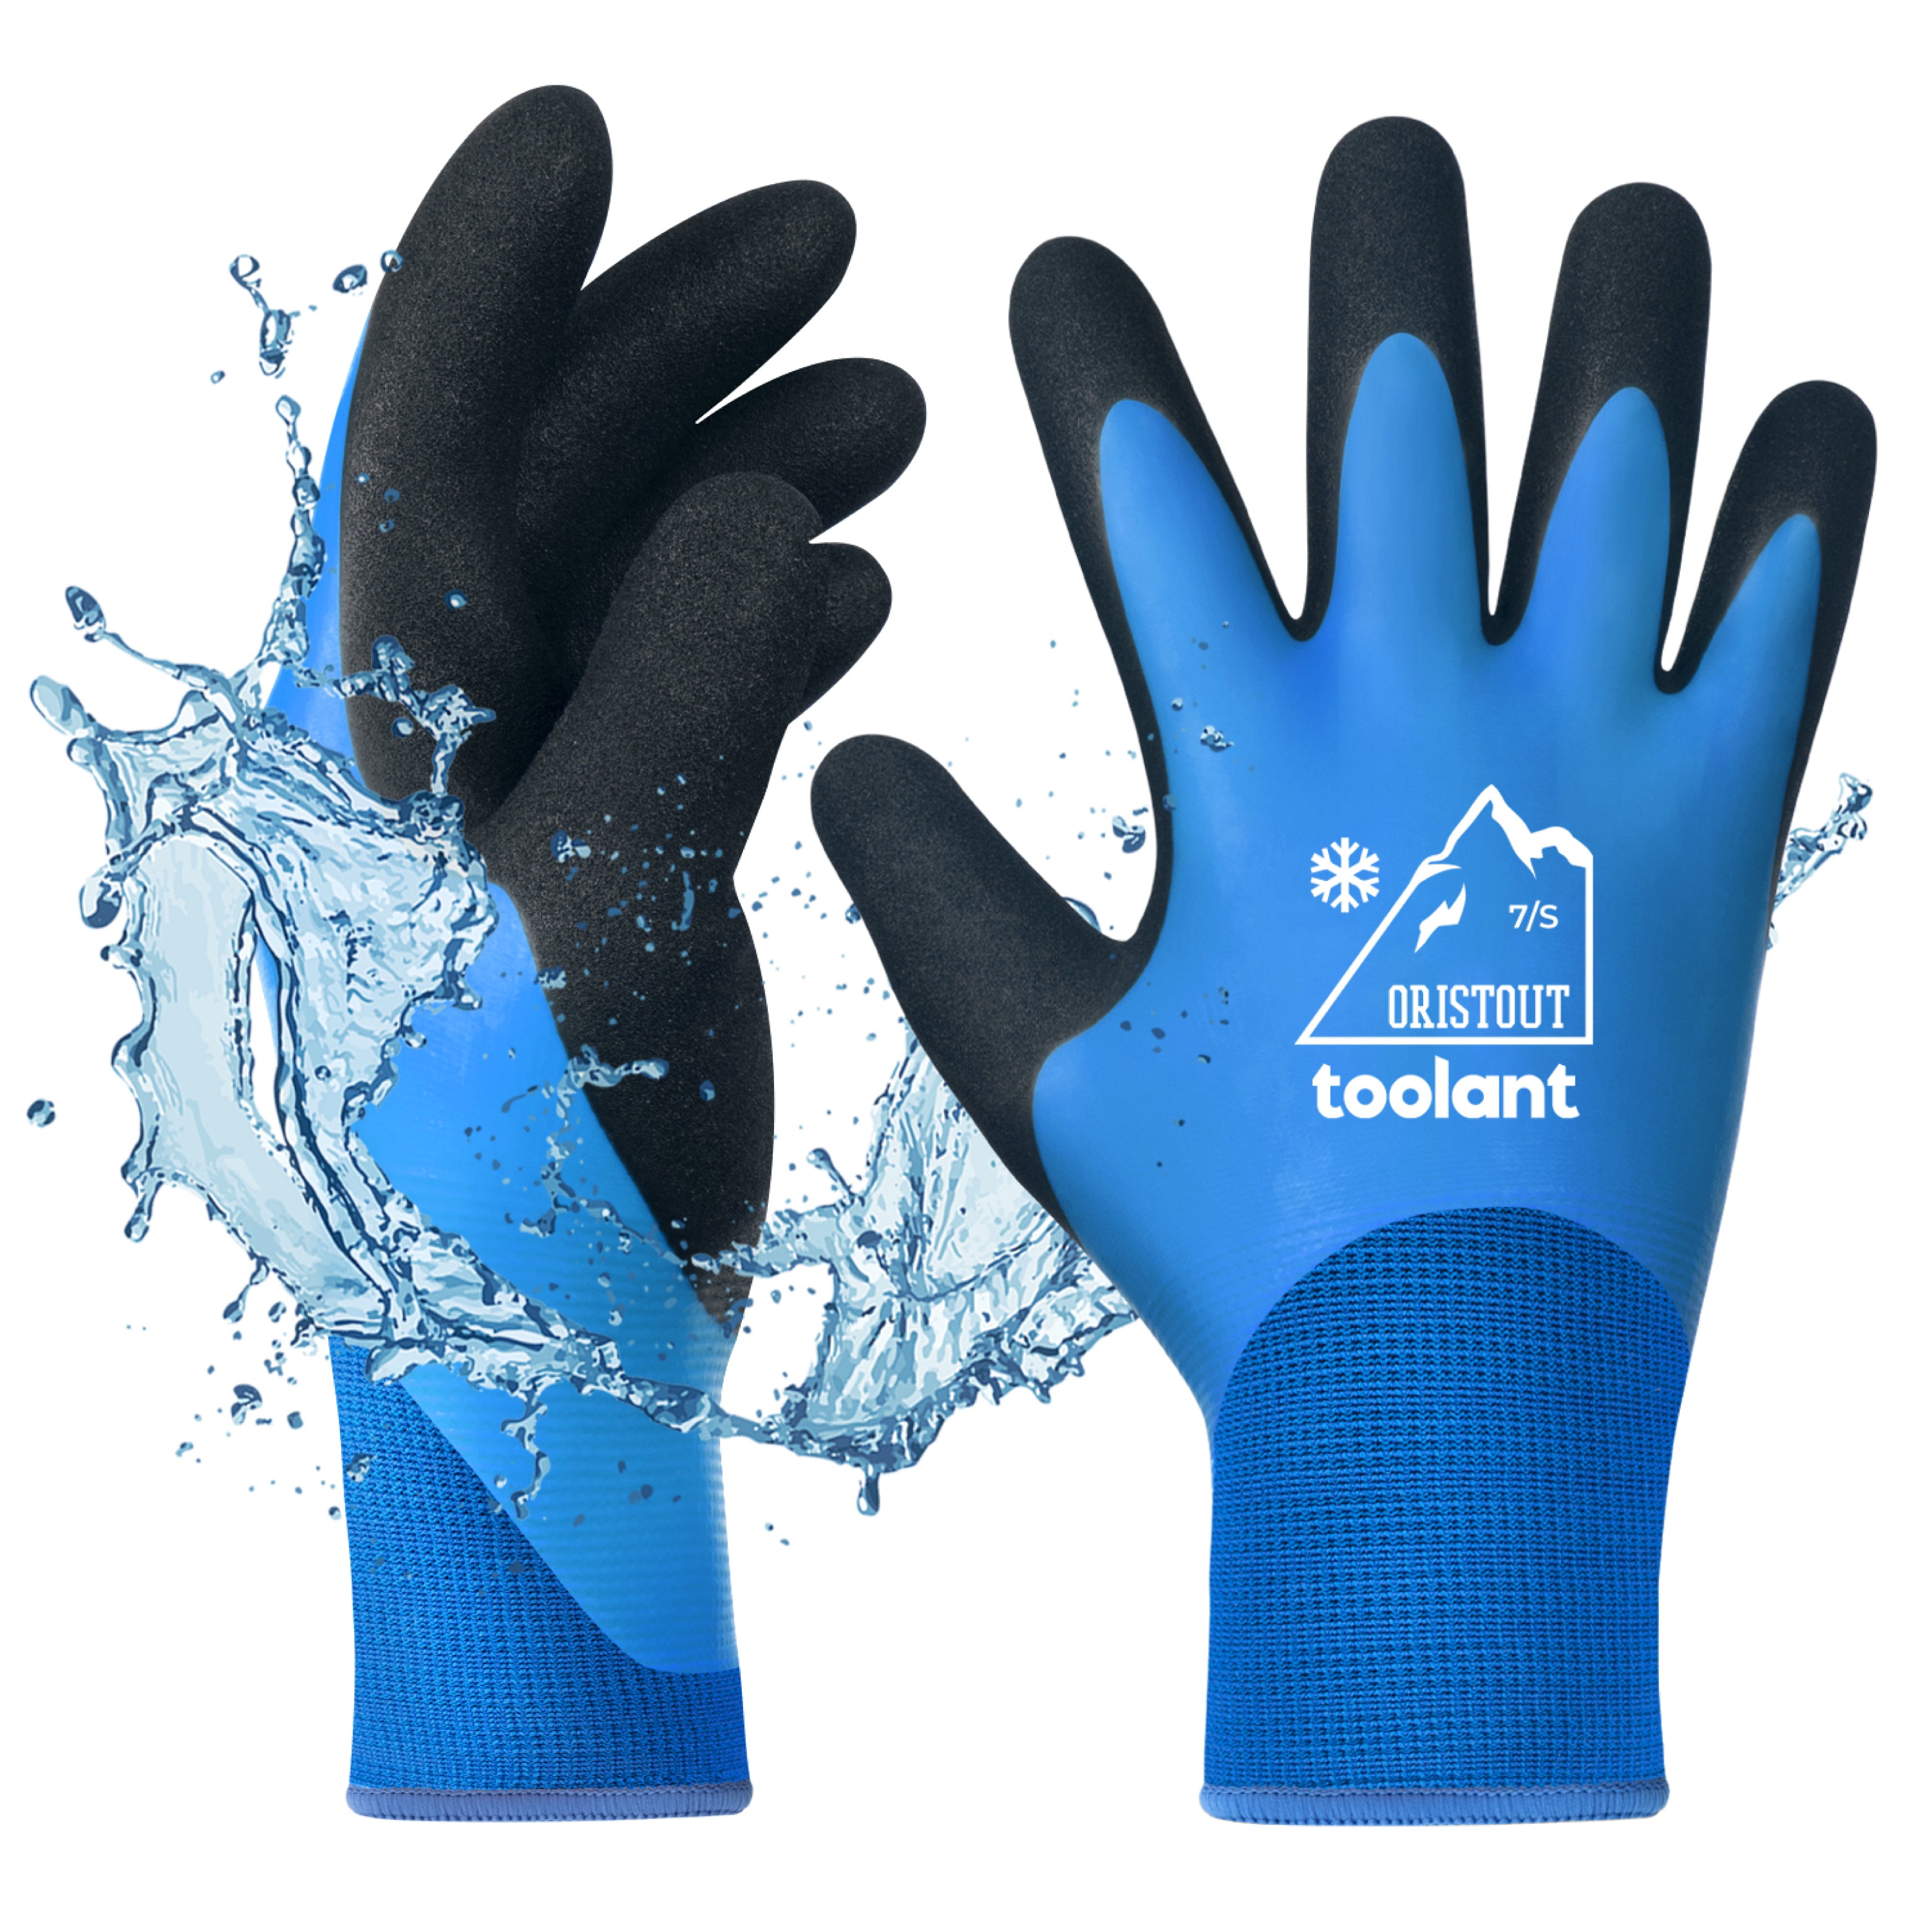 Men's Glacier Grip Premium High Performance Gloves, Anti-Slip Grip,  Thinsulate Lined, 100% Waterproof